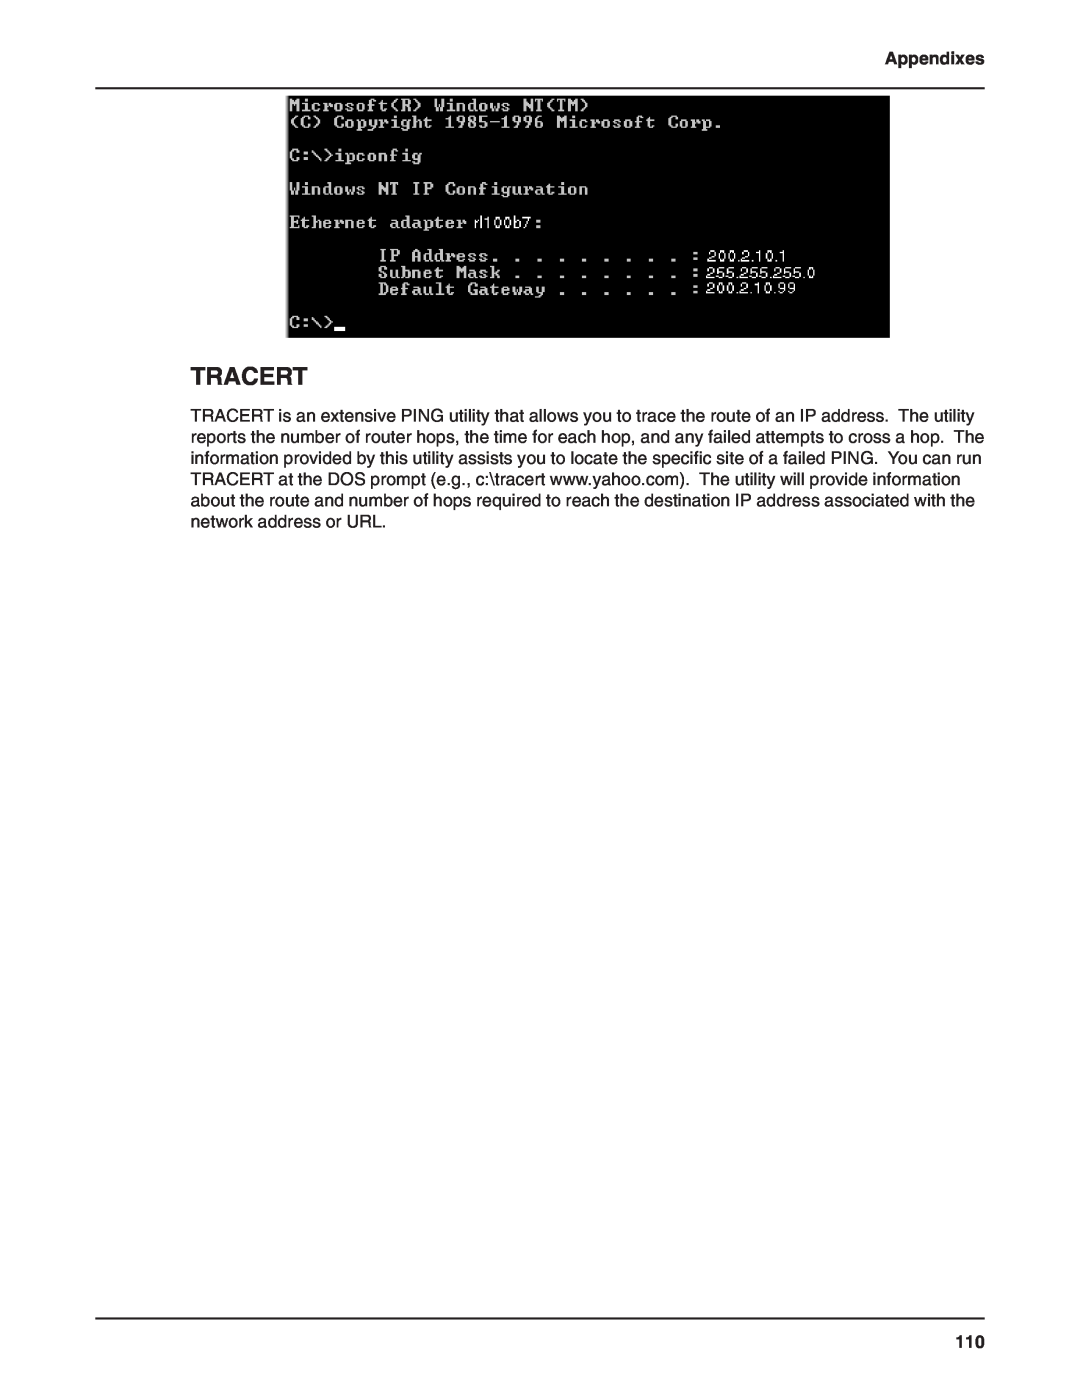 Multi-Tech Systems RF802EW manual Tracert, Appendixes 